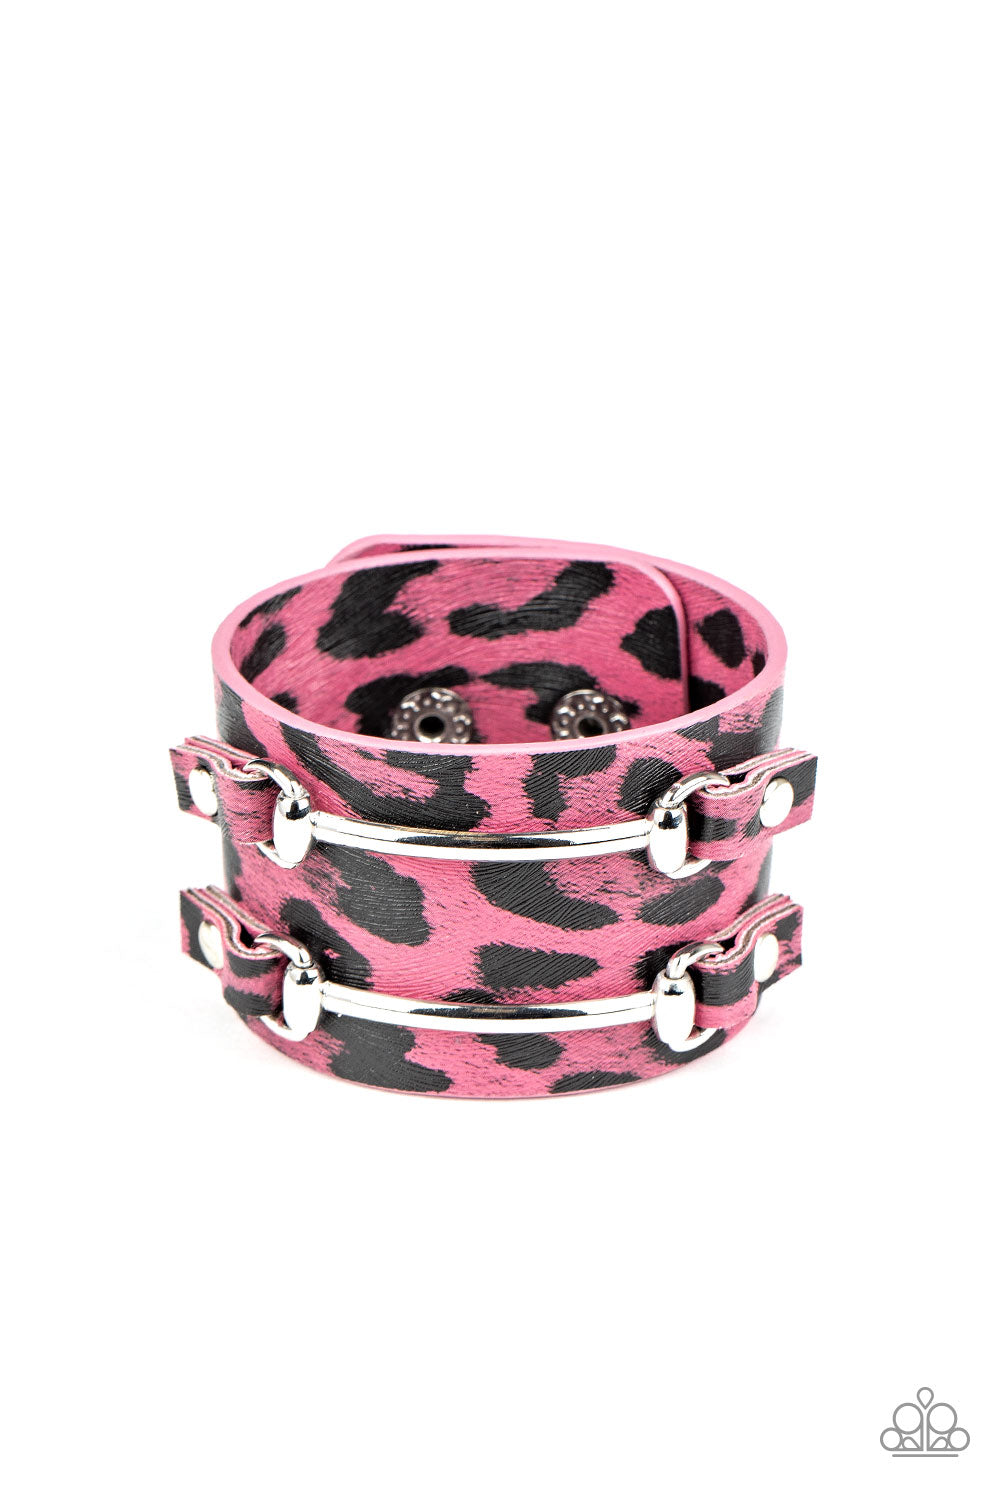 Safari Scene - Pink Bracelet - Princess Glam Shop